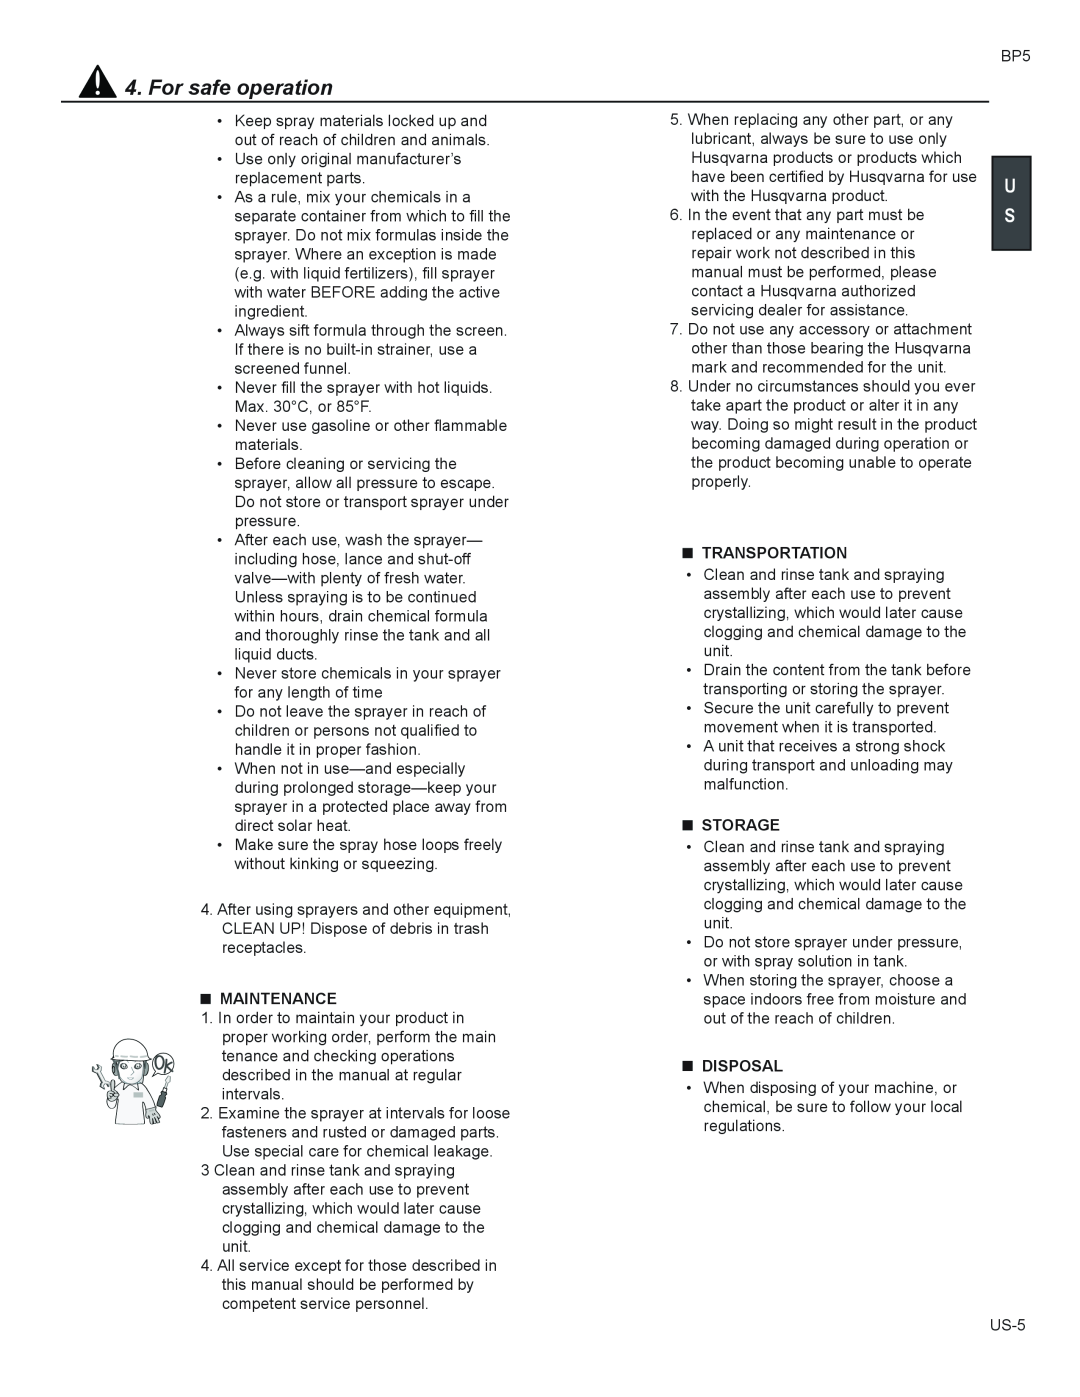 Husqvarna BP5 manual For safe operation, Maintenance, Transportation, Storage, Disposal 